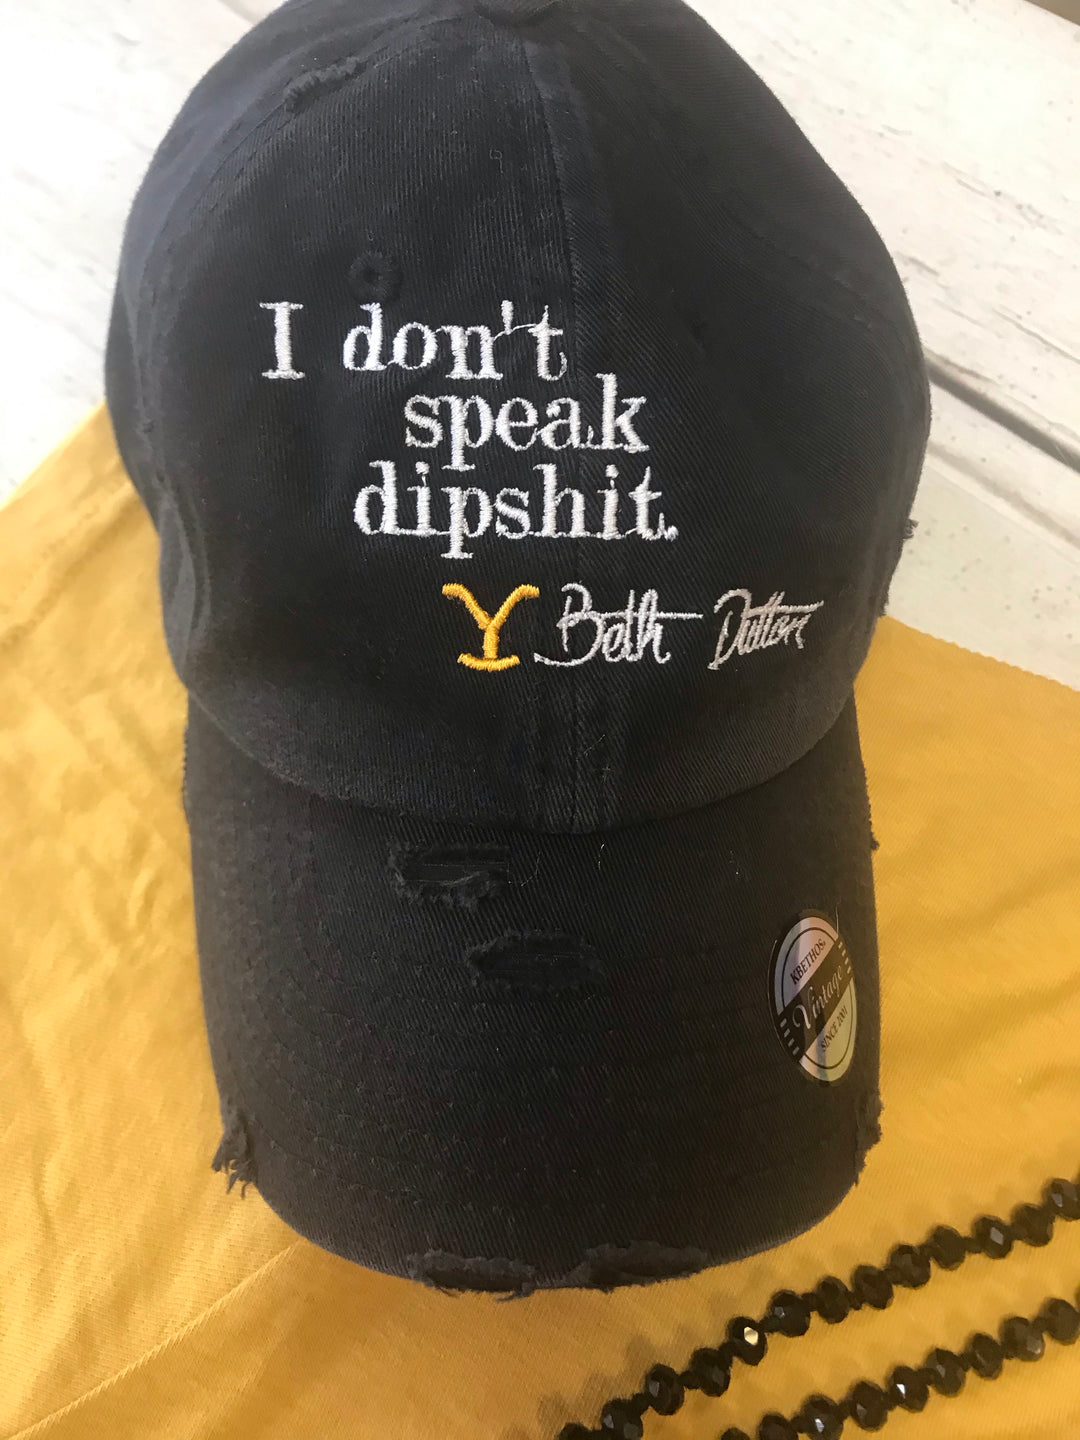 I don’t speak hat